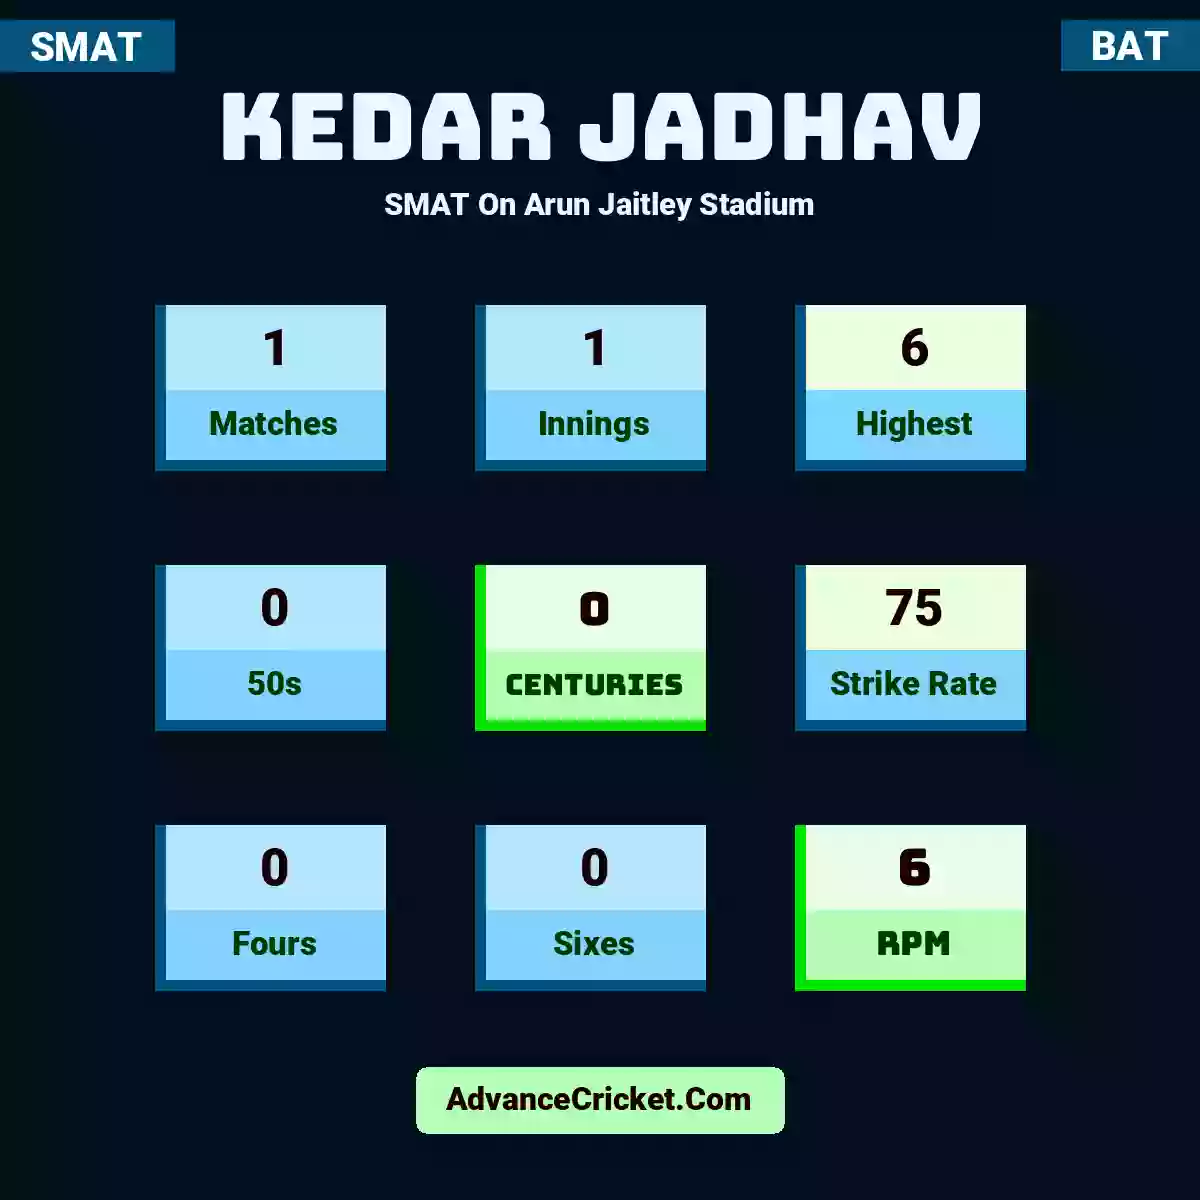 Kedar Jadhav SMAT  On Arun Jaitley Stadium, Kedar Jadhav played 1 matches, scored 6 runs as highest, 0 half-centuries, and 0 centuries, with a strike rate of 75. K.Jadhav hit 0 fours and 0 sixes, with an RPM of 6.